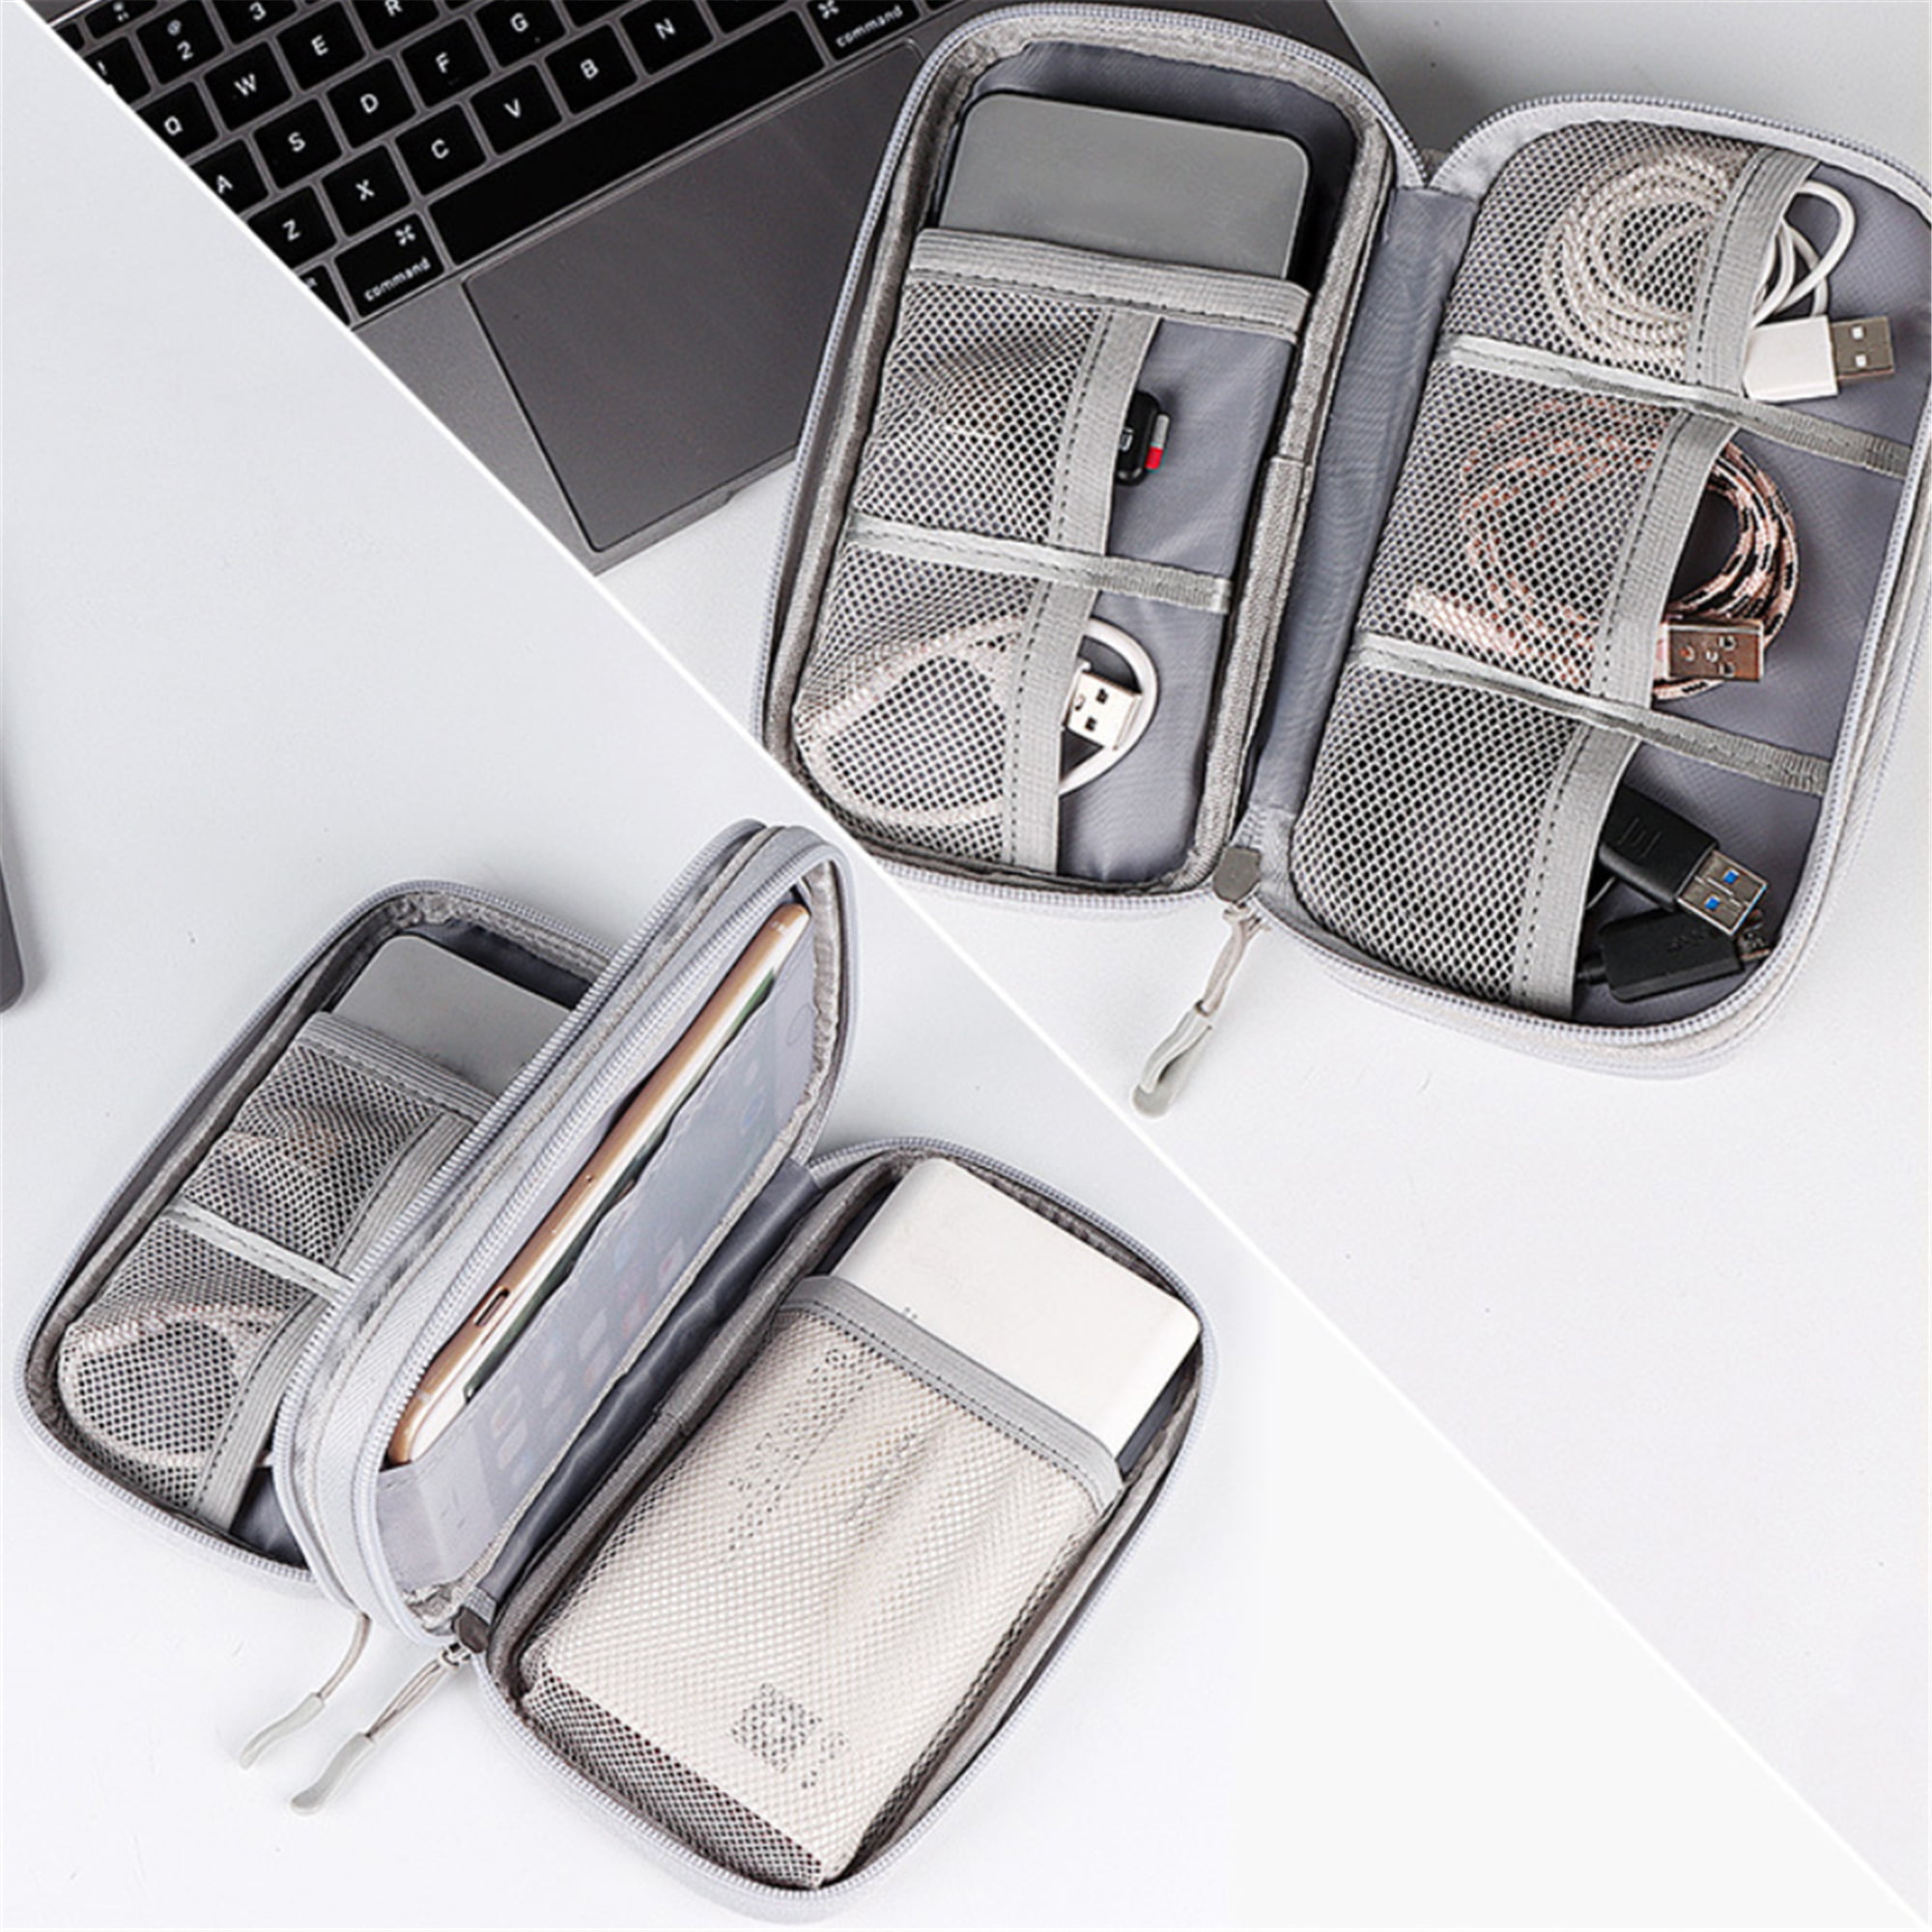 Portable Earphone Data USB Cable Travel Case Organizer Pouch Storage Bag Box GT 